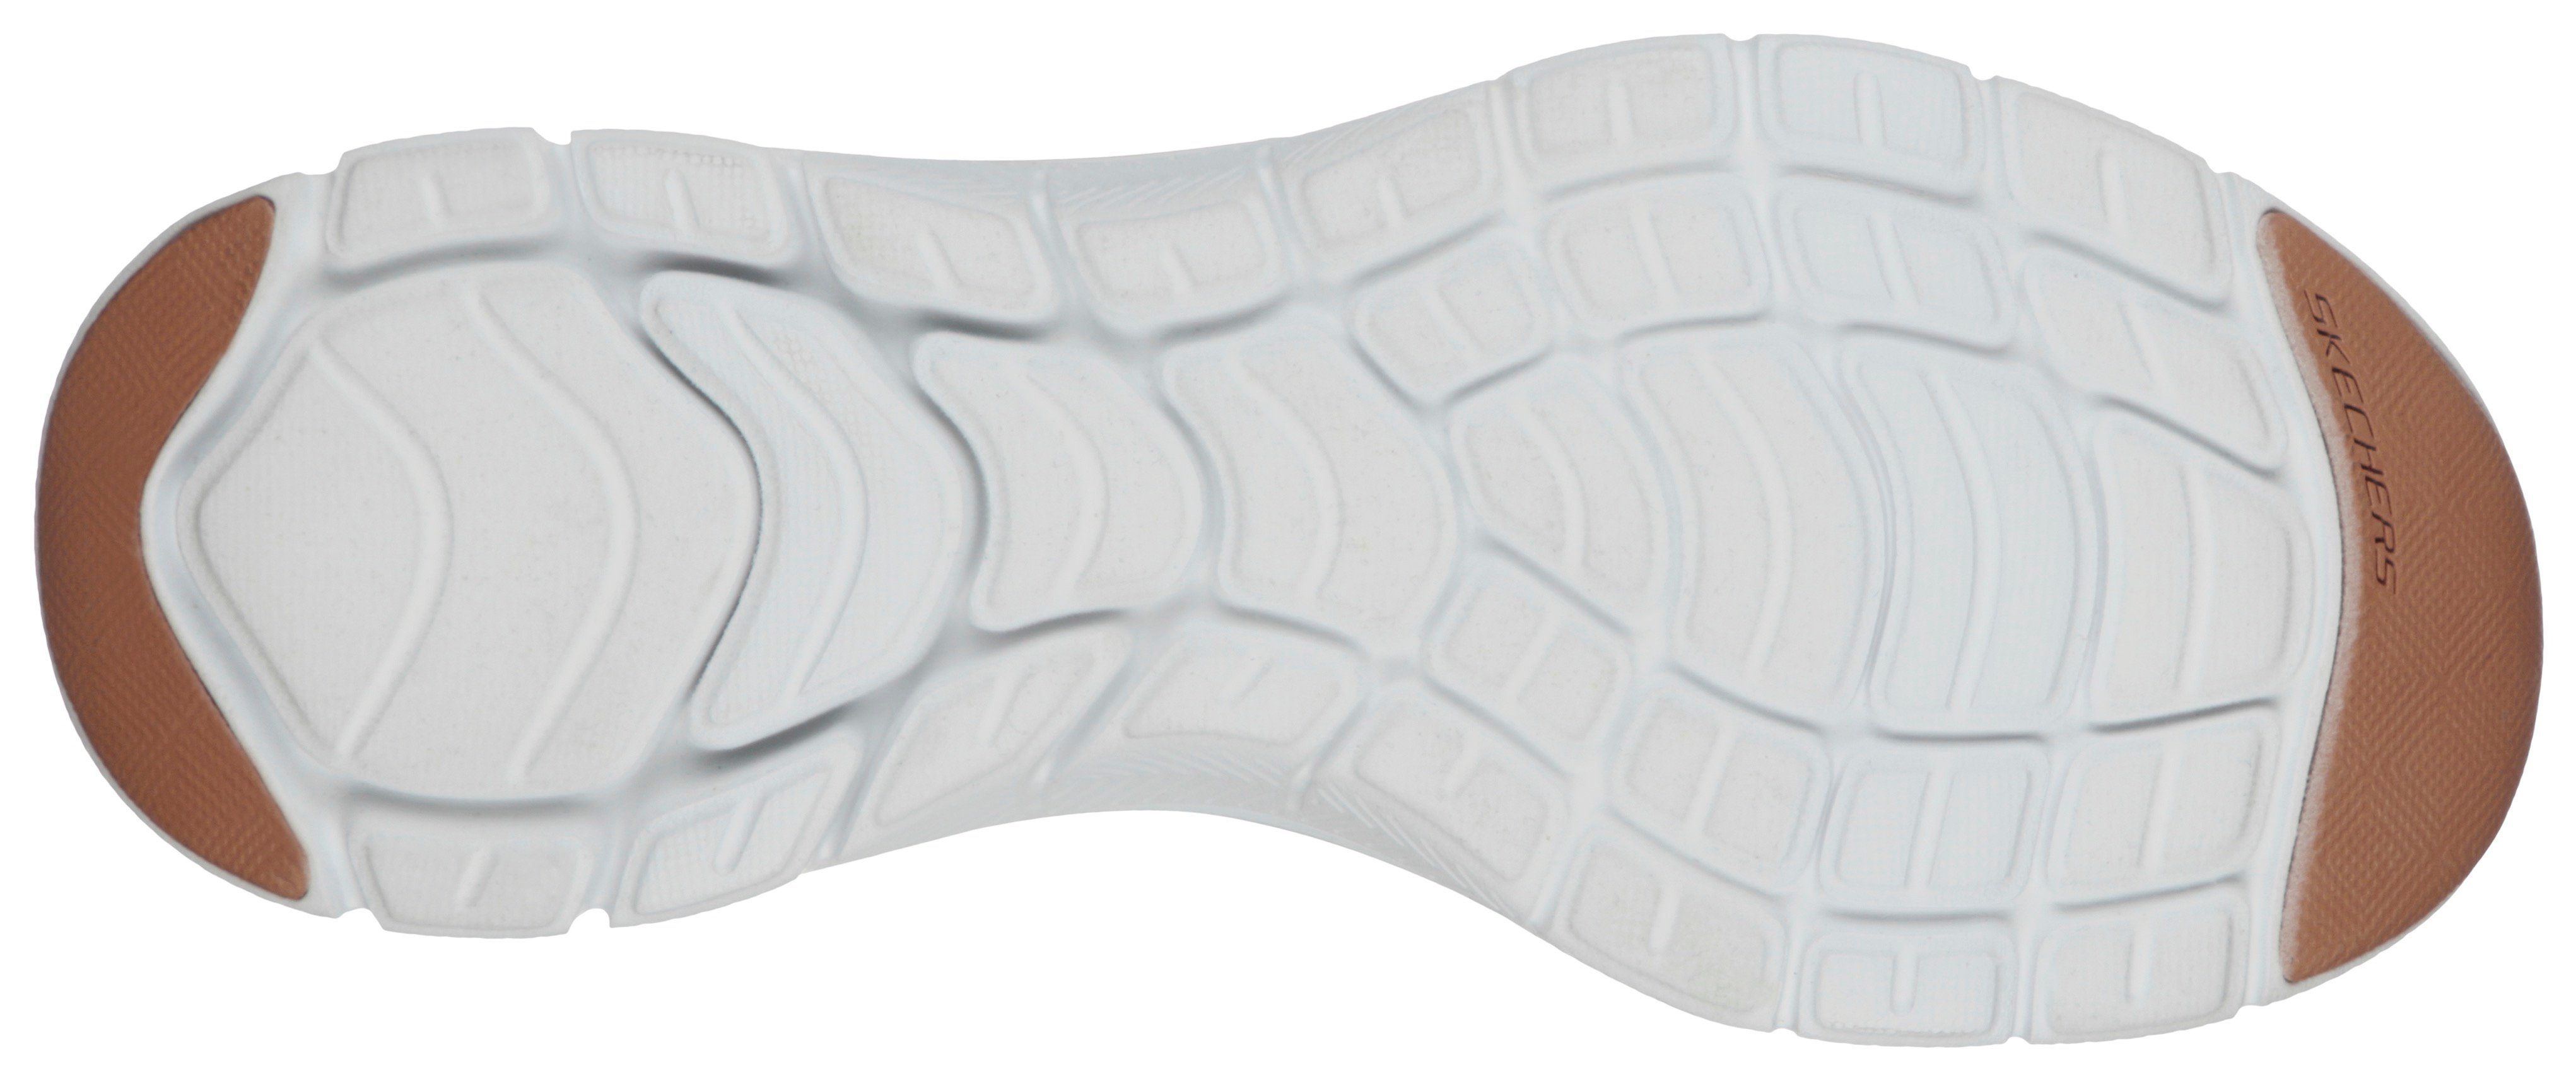 weiß-roségoldfarben APPEAL 4.0 Foam Air-Cooled Memory Ausstattung VIEW Skechers mit Sneaker FLEX BRILLINAT